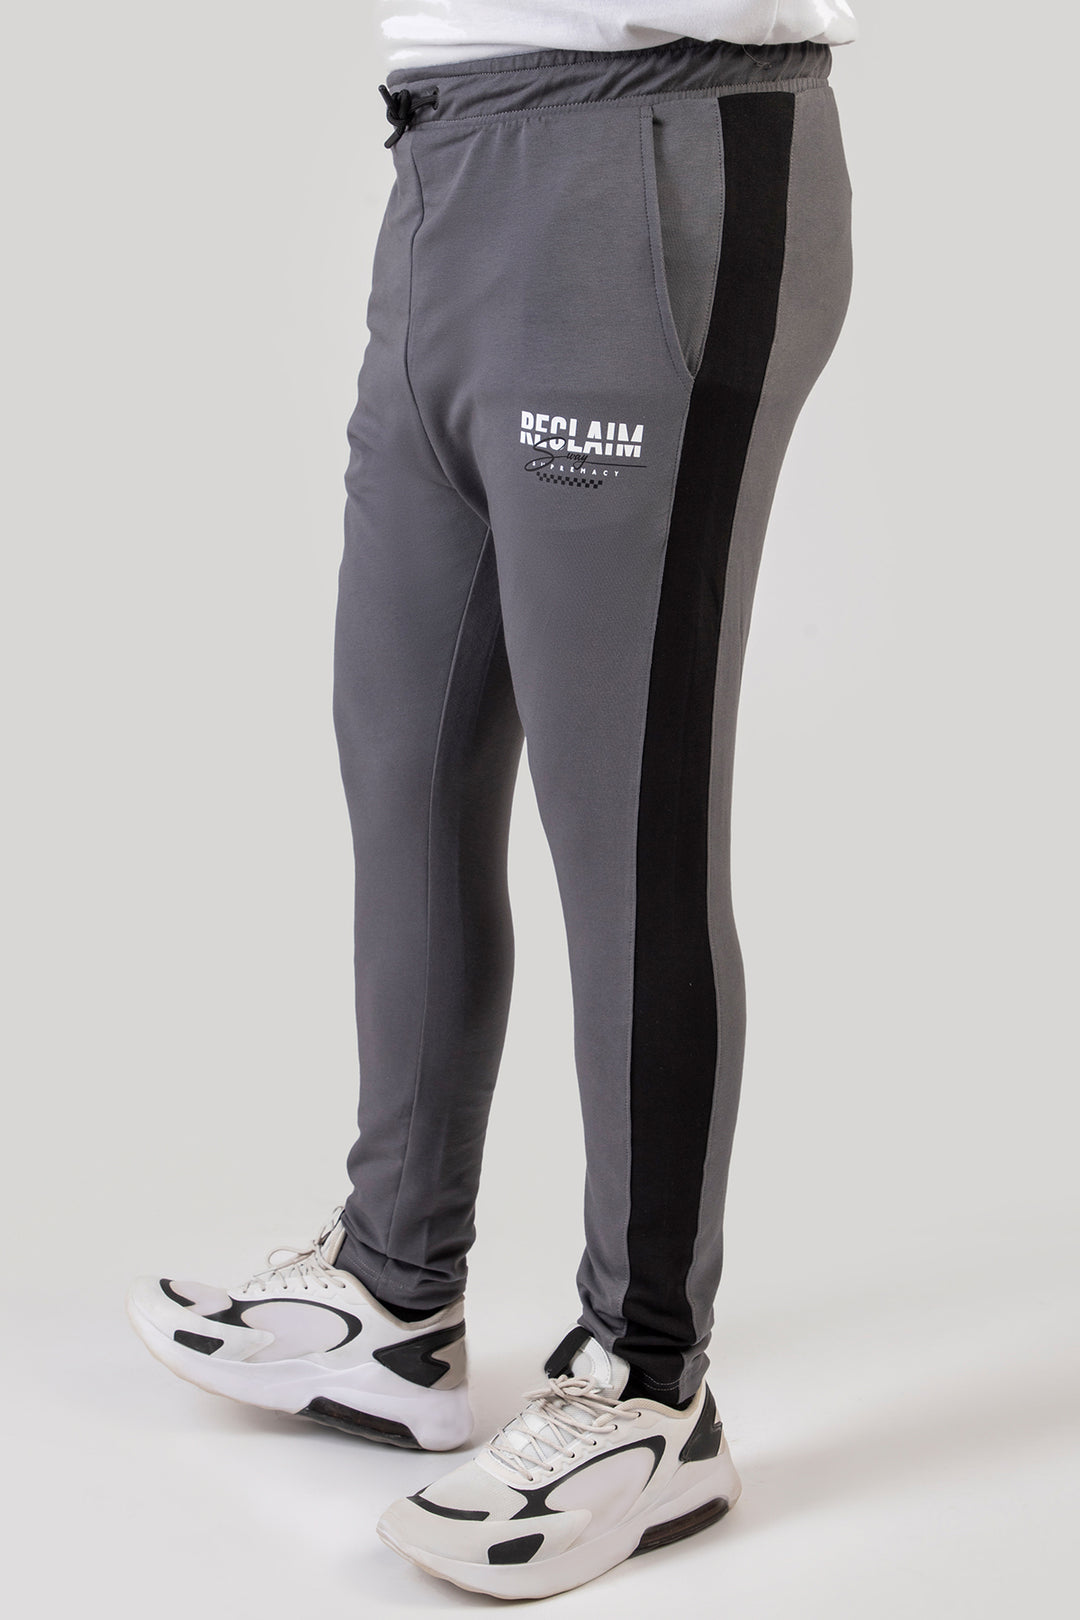 Pewter Grey Panelled Jog Pants (Plus Size) - W23 - MTR091P